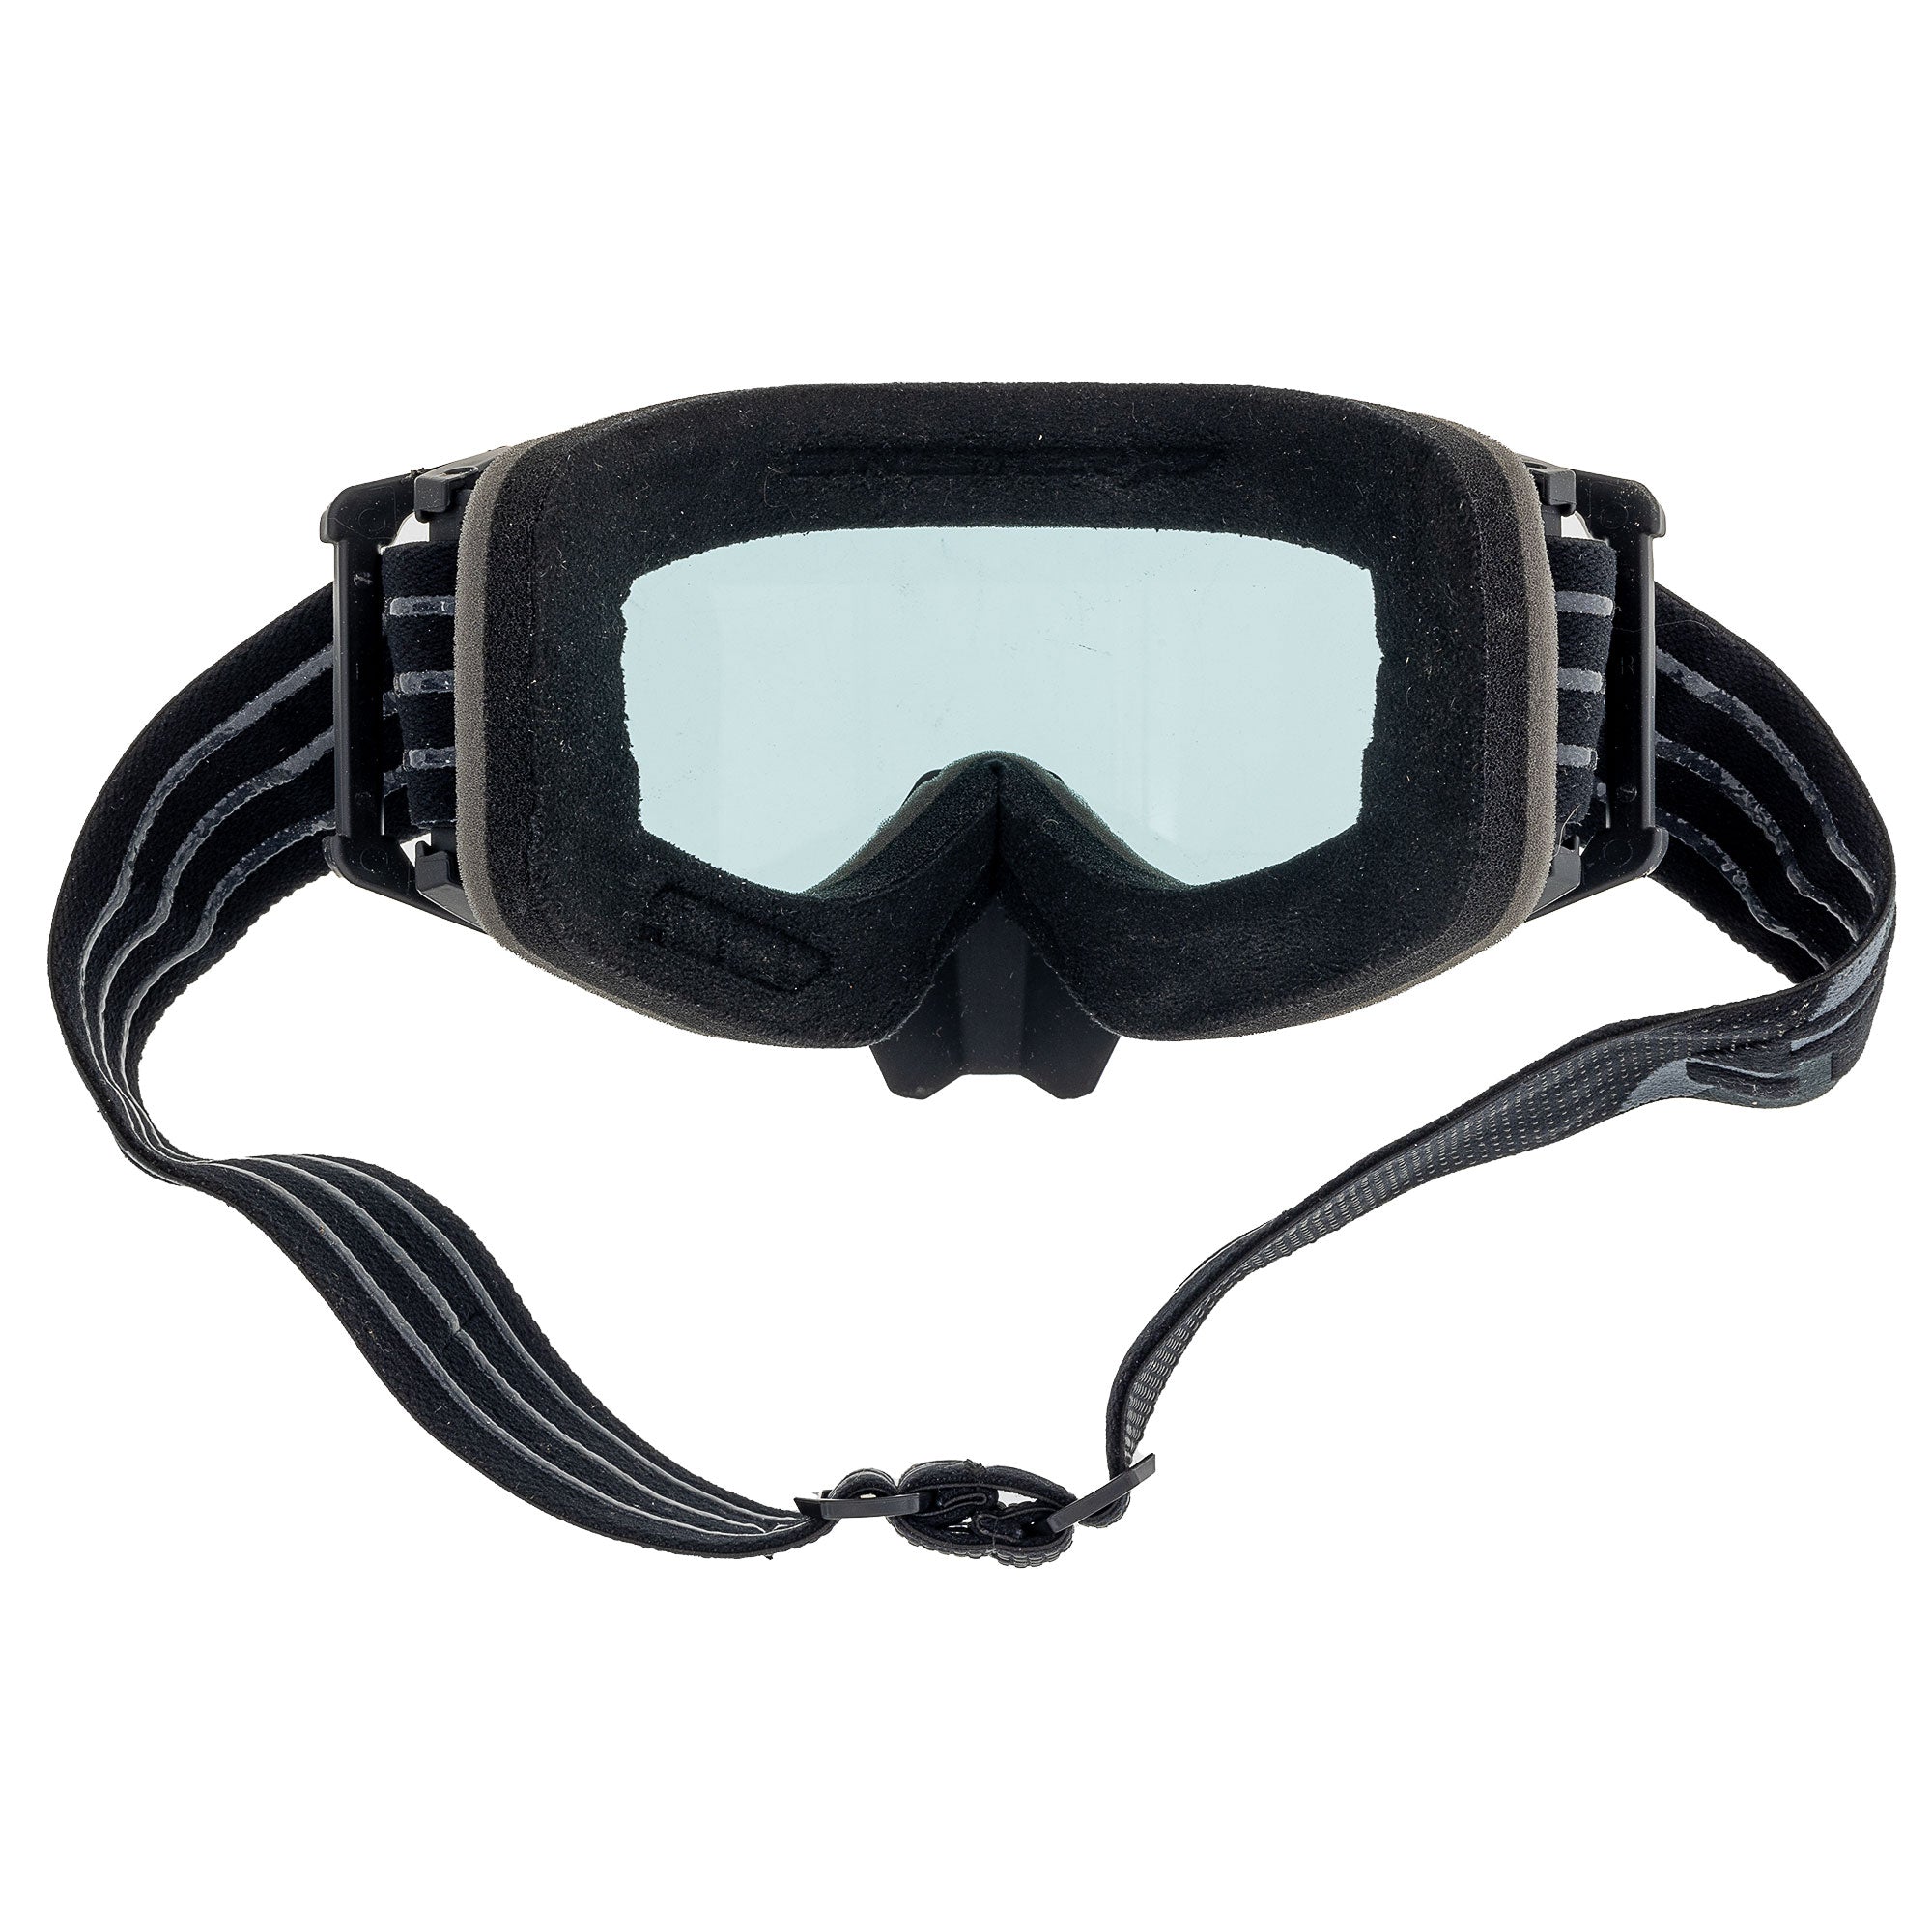 Genuine OEM 509 Sinister X7 Fuzion Flow Goggles